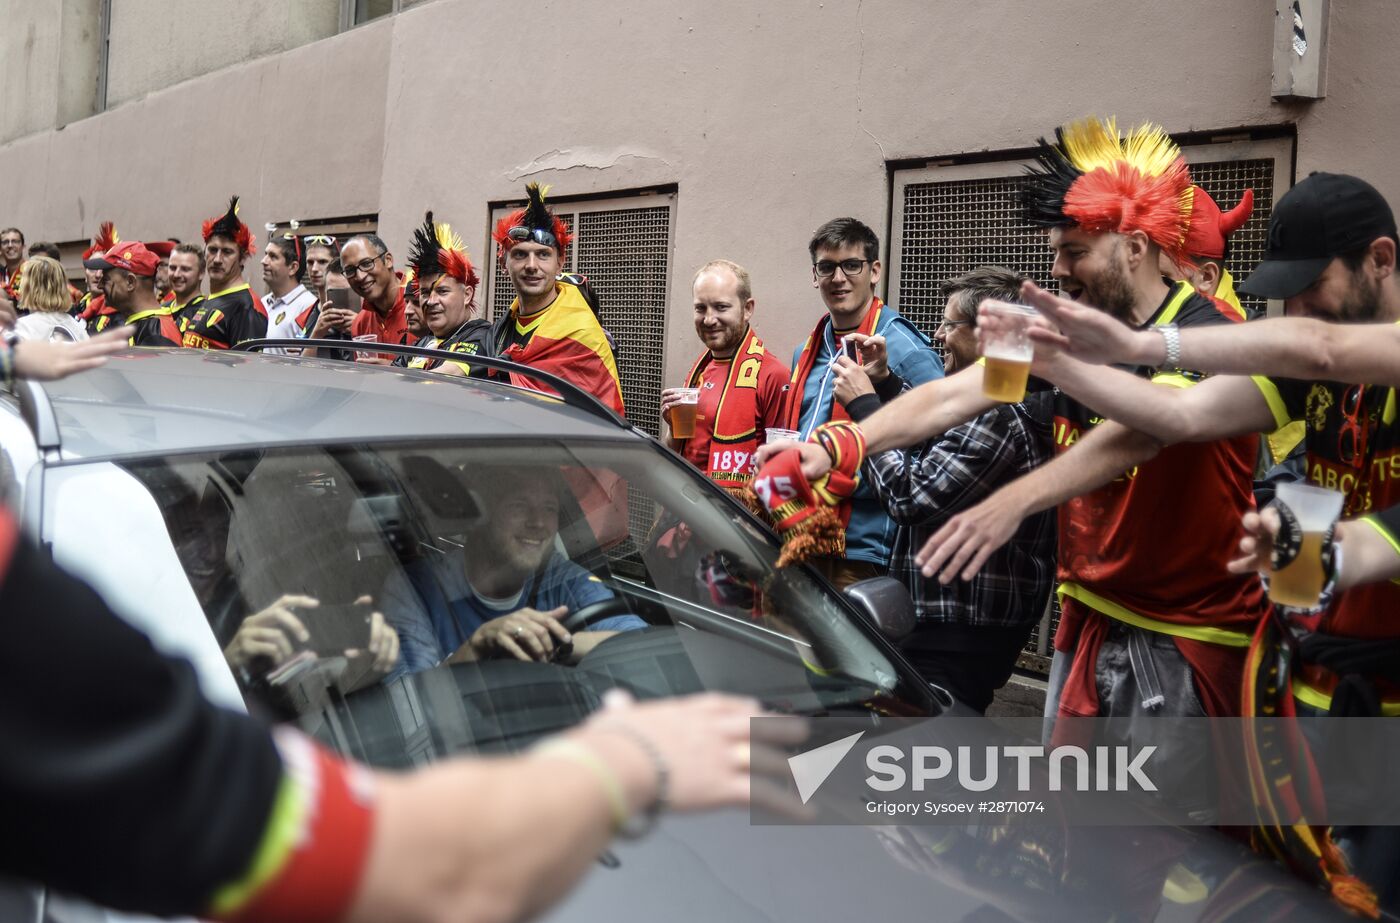 Belgian football fans